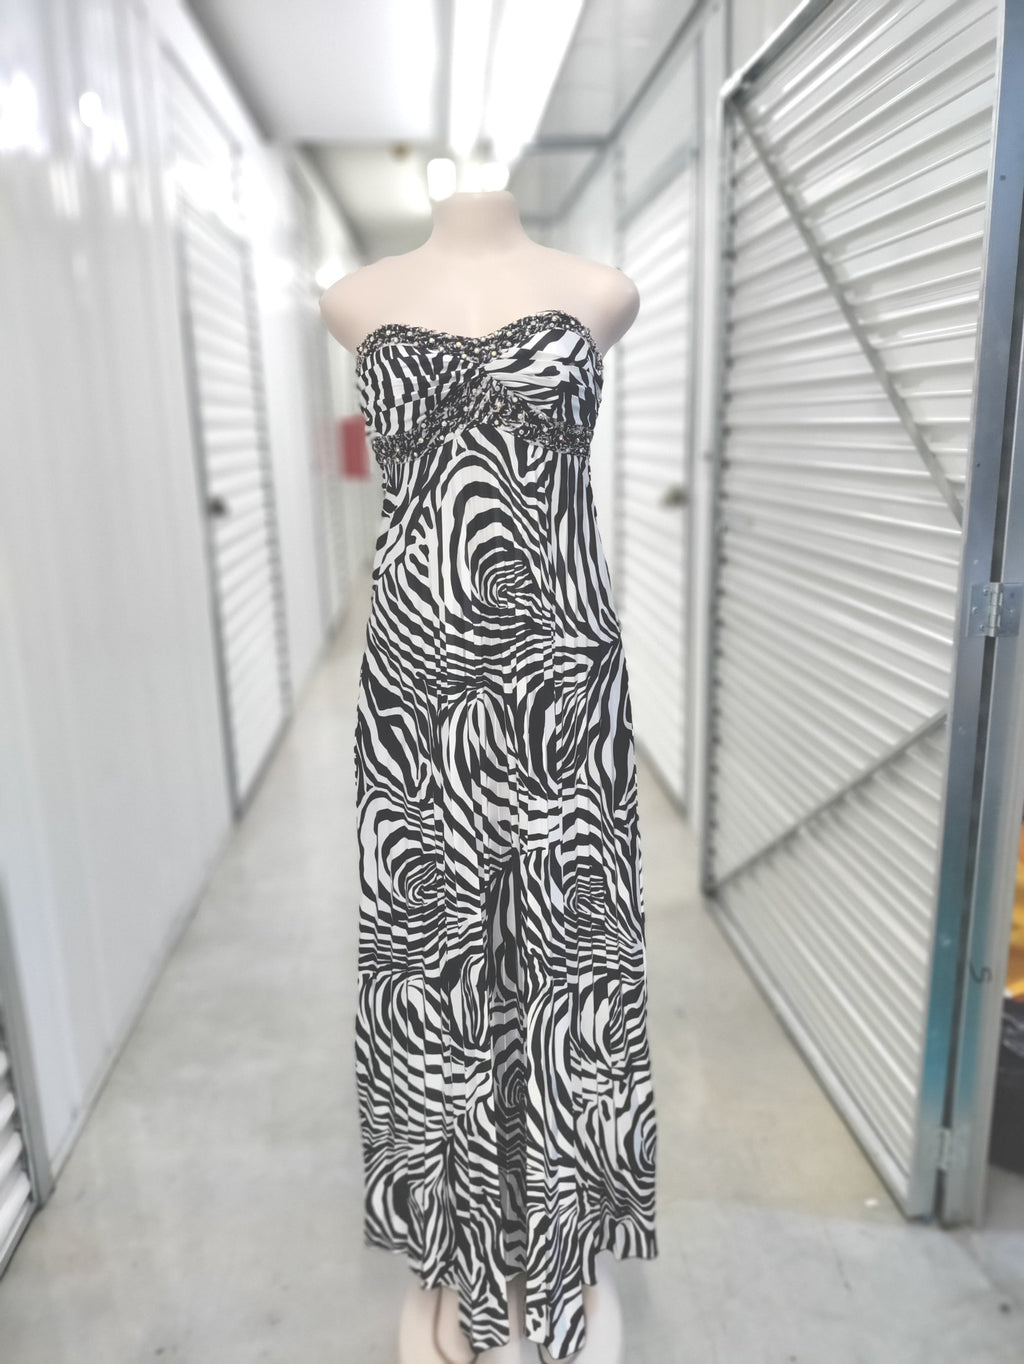 Zebra print strapless evening gown